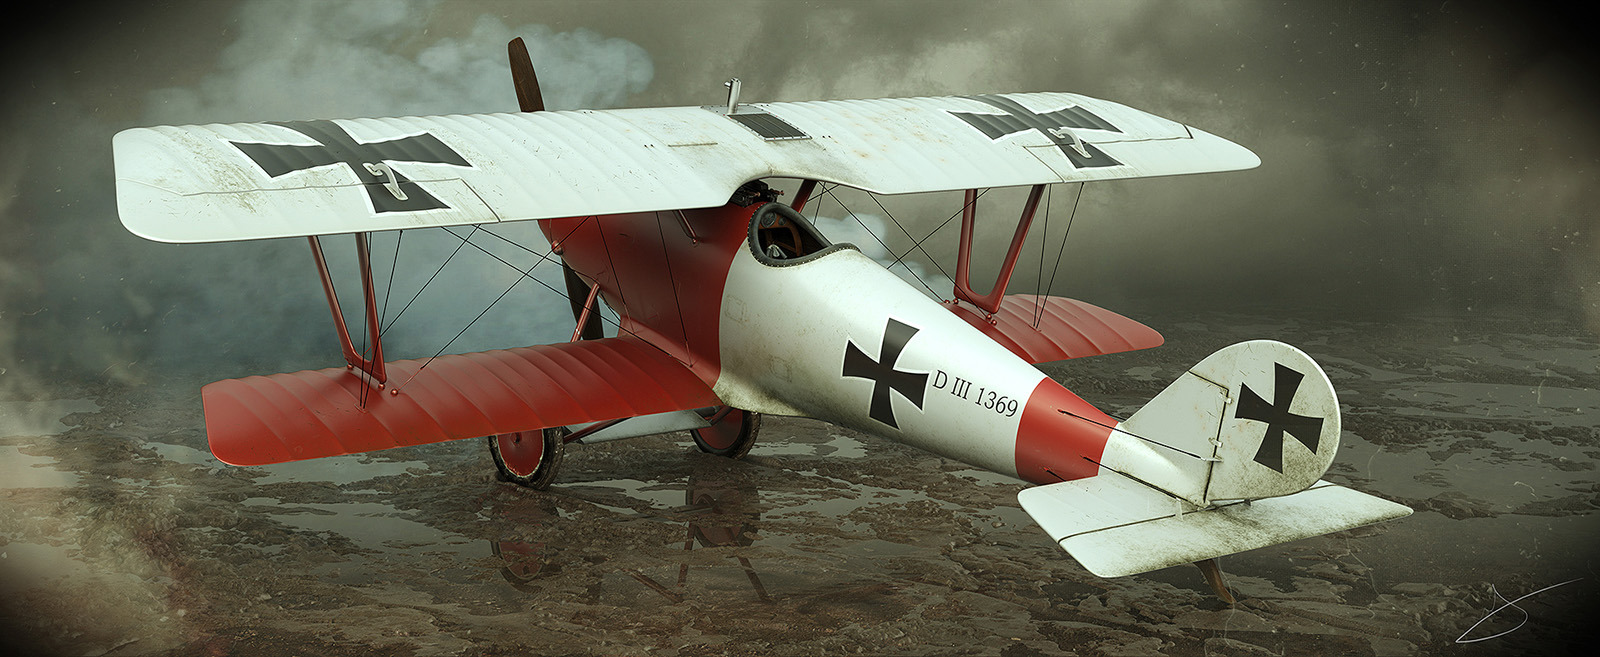 Pfalz D III a First Great Air War airplane